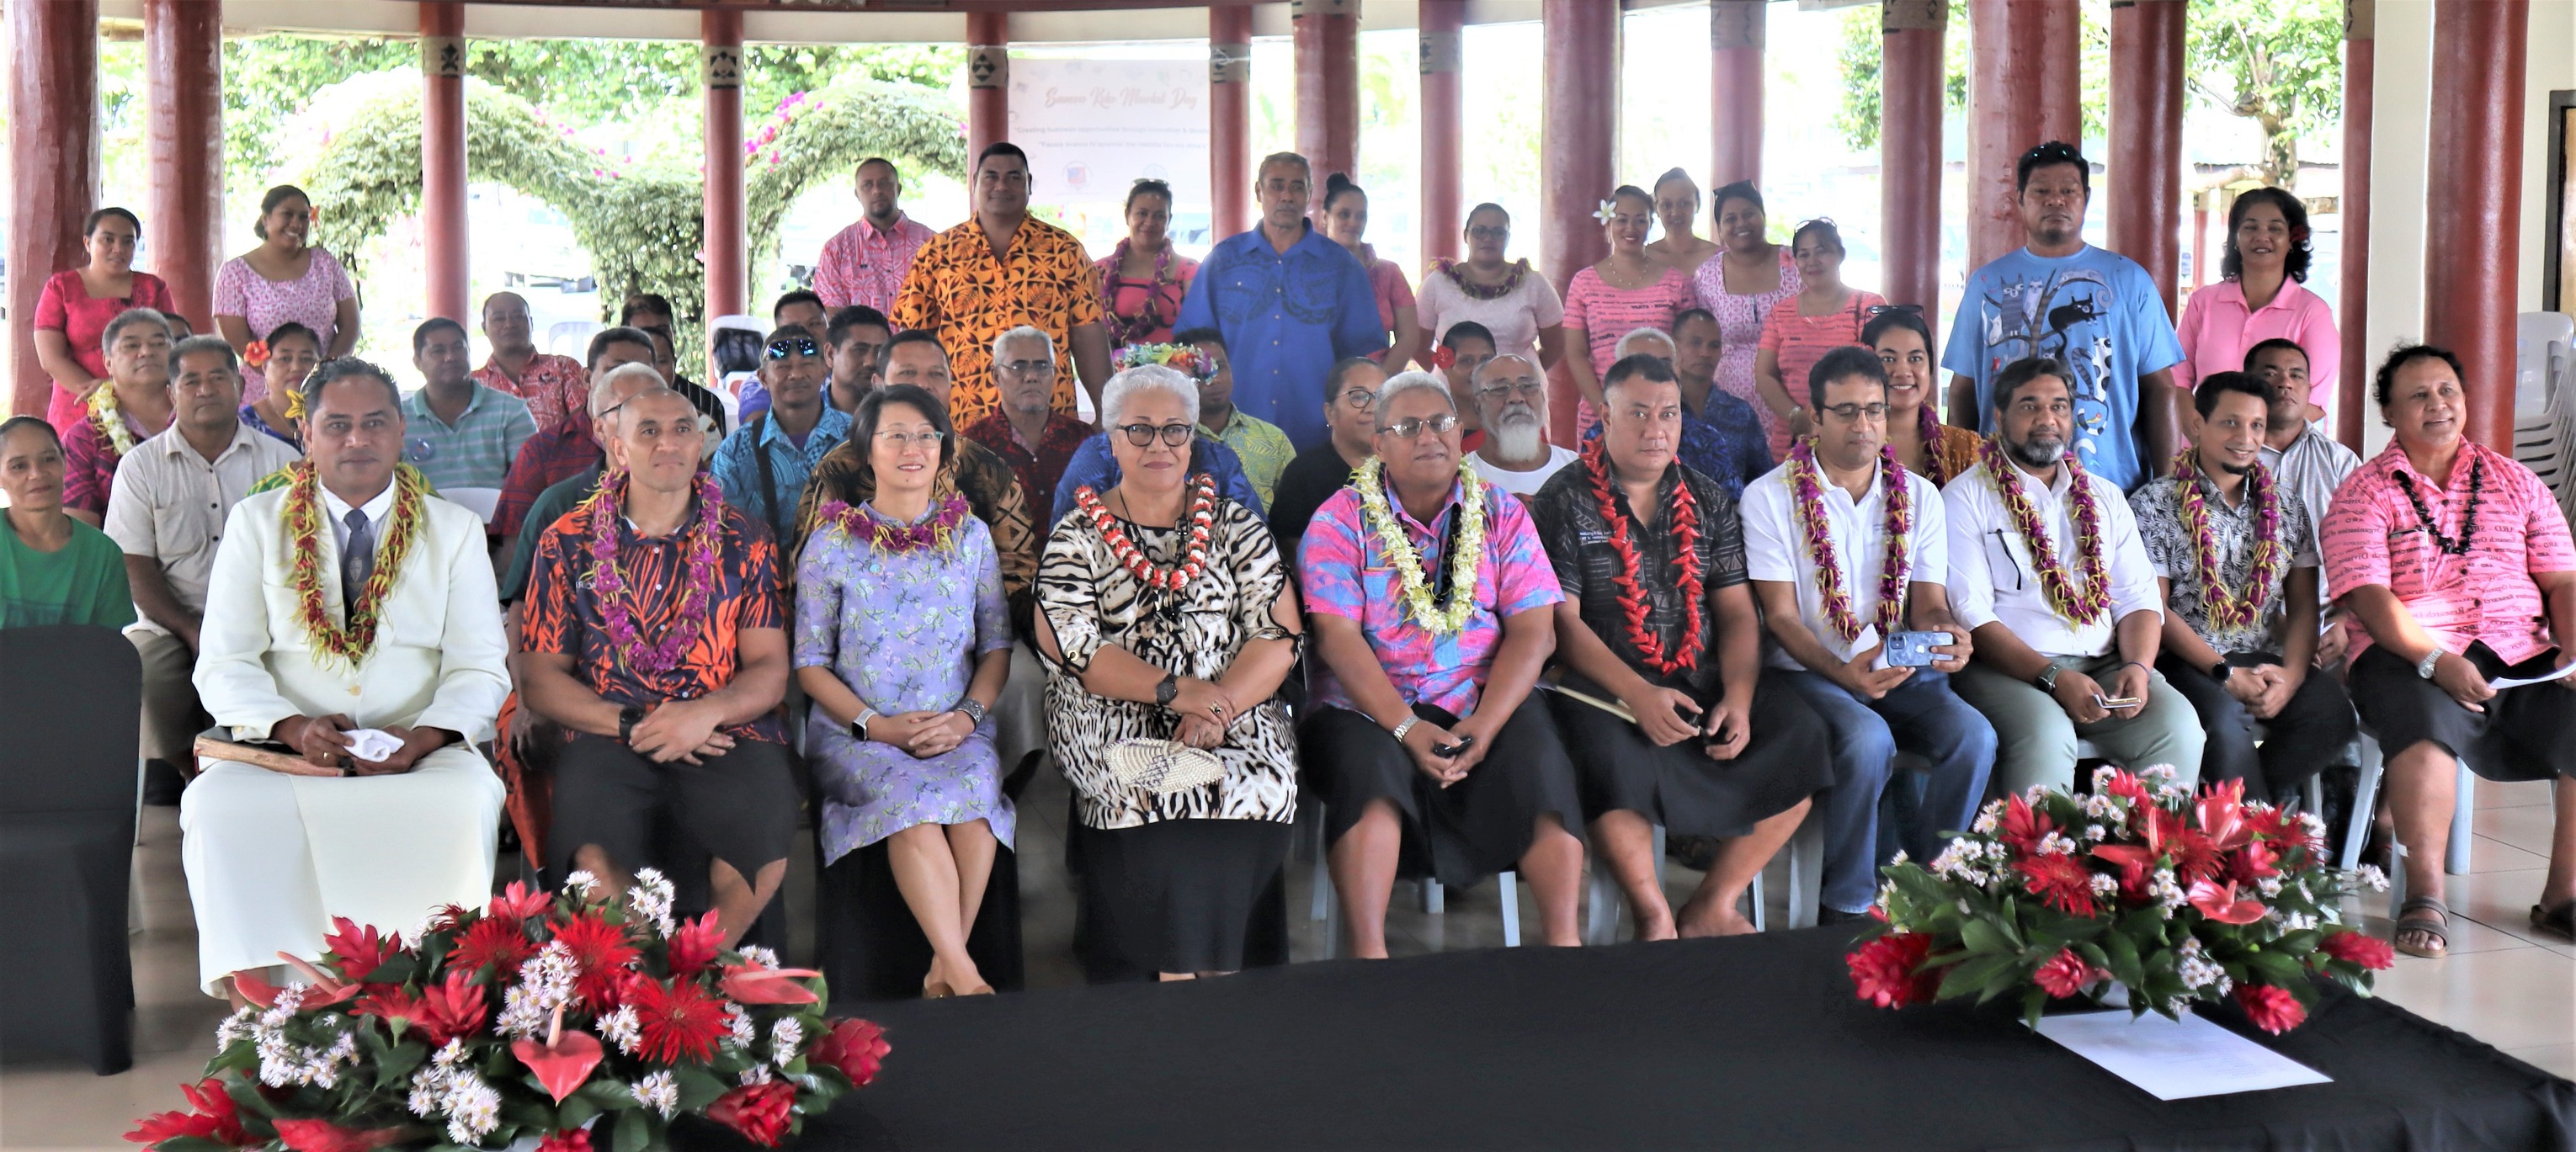 Participants at the Samoa Koko Market Day